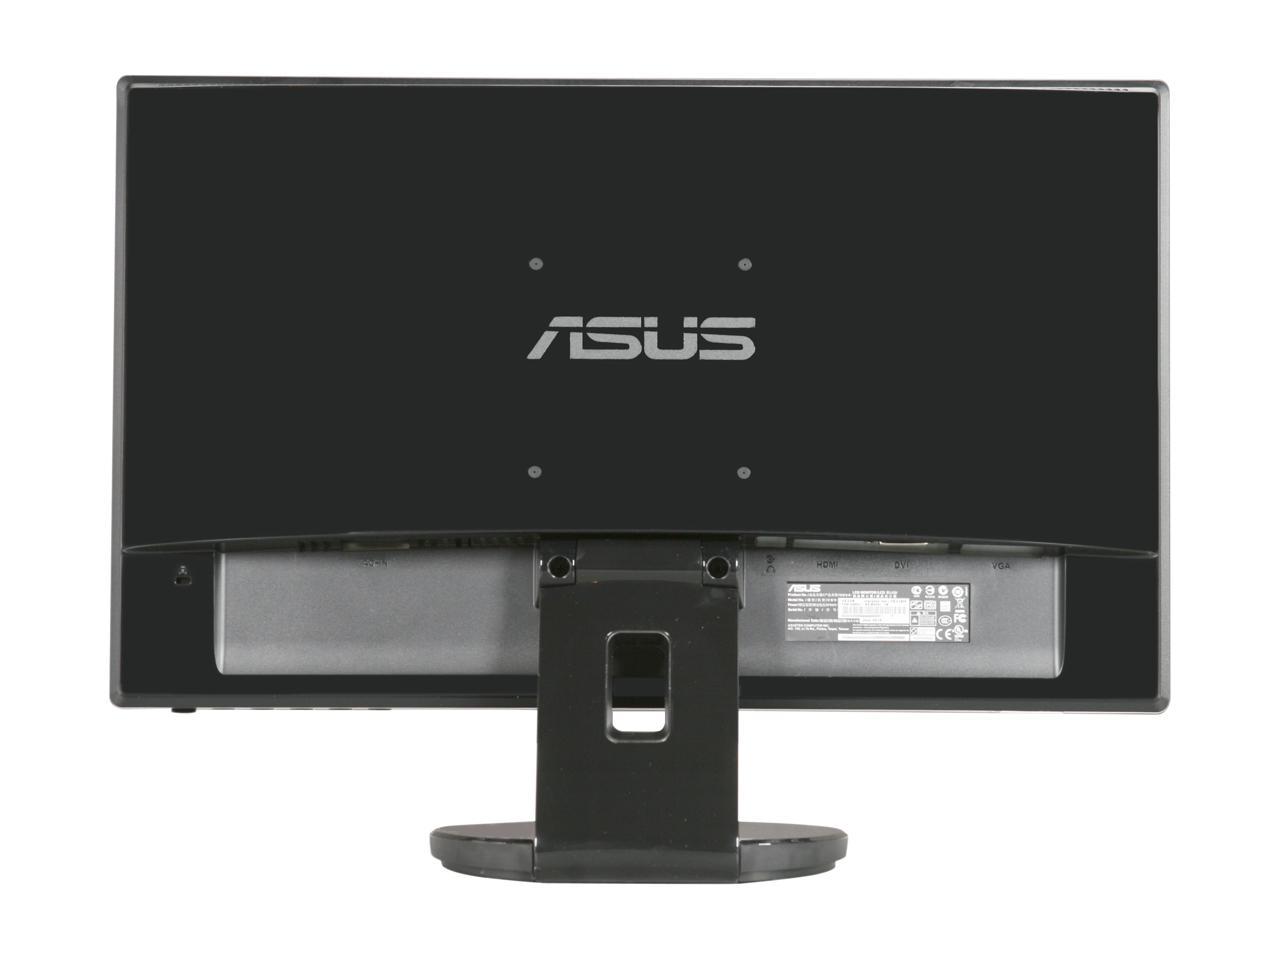 ASUS VE228H 22" (Diagonal 21.5") Full HD 1920 x 1080 5ms DVI-D VGA HDMI Built-in Speakers SPLENDID Video Preset Mode Asus Eye Care with Ultra Low-Blue Light & Flicker-Free LED Backlight LCD Monitor